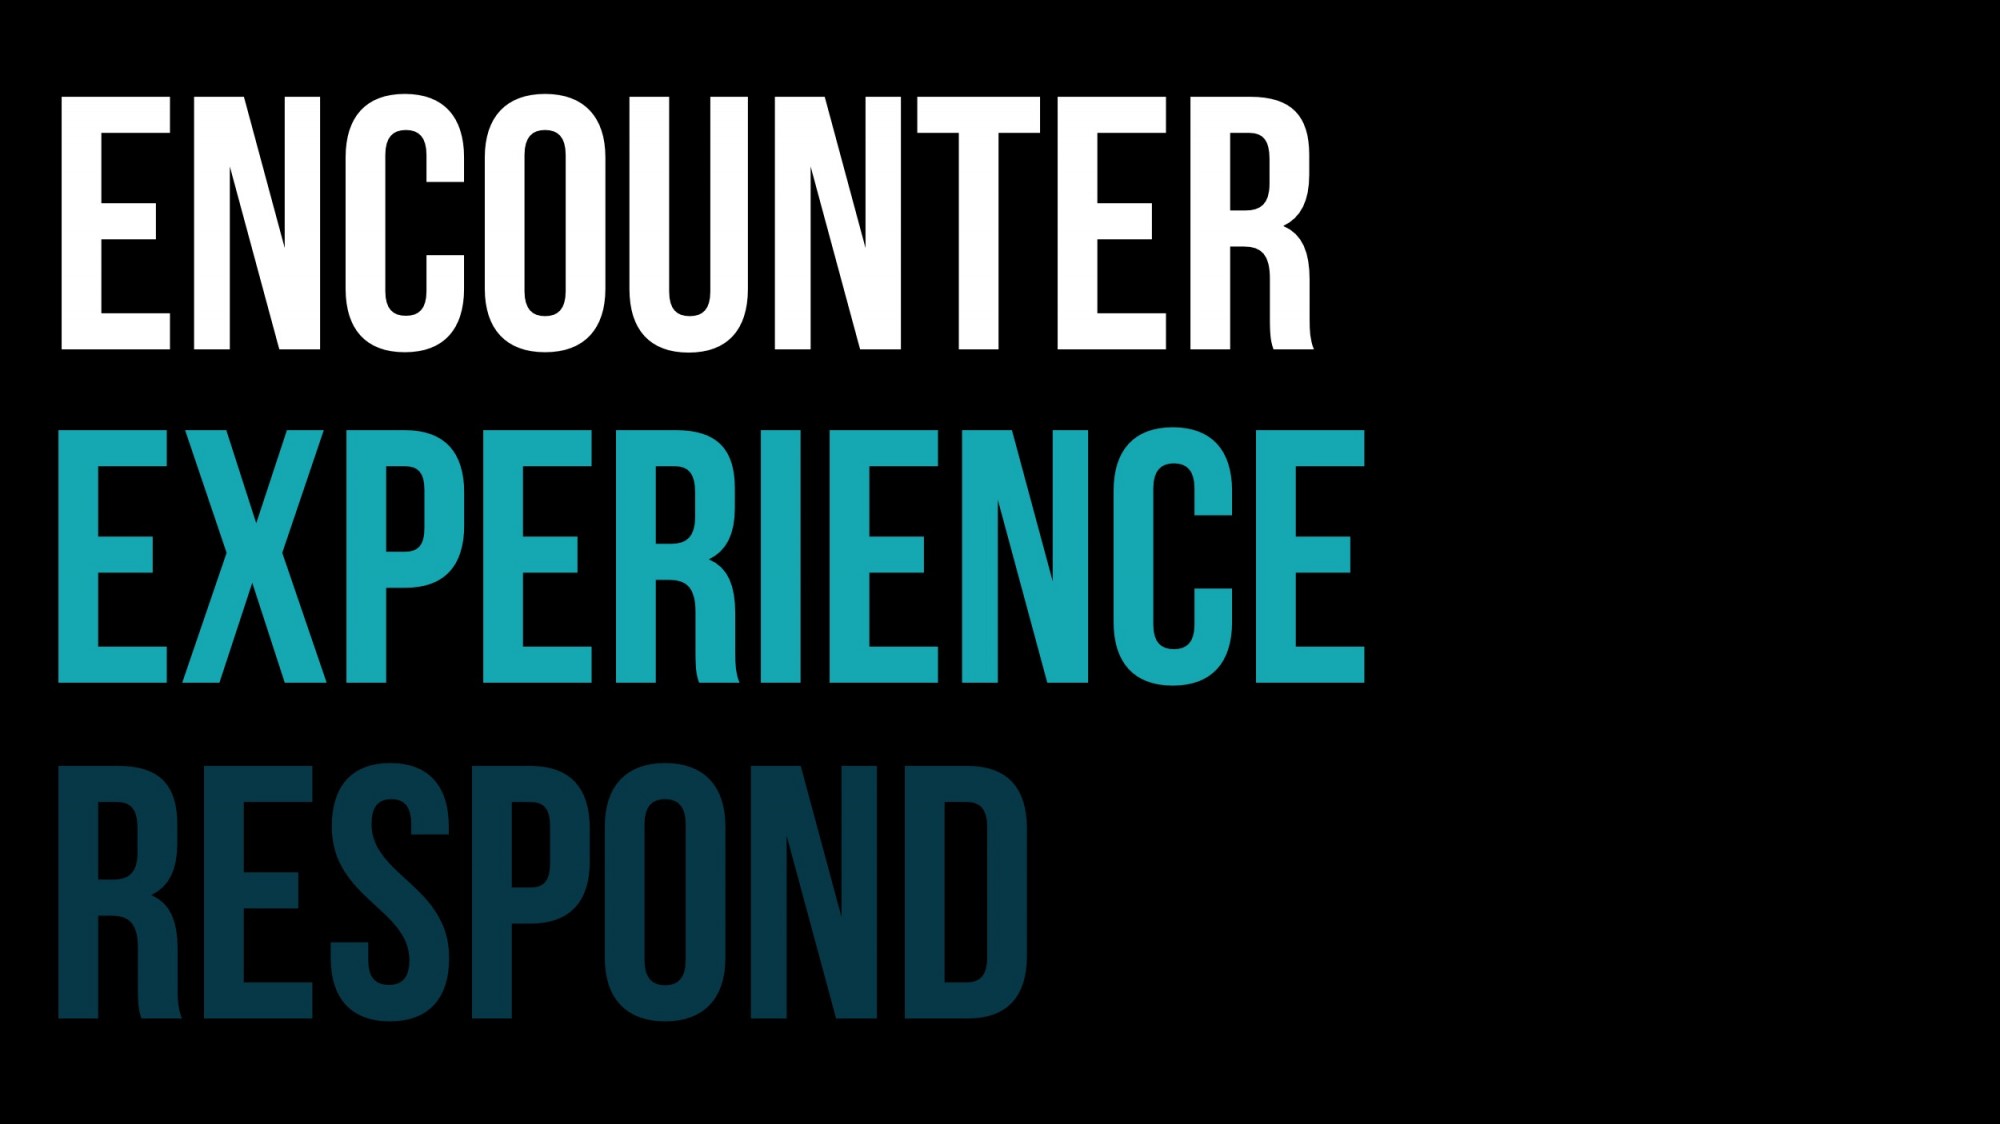 Encounter, Experience, Respond